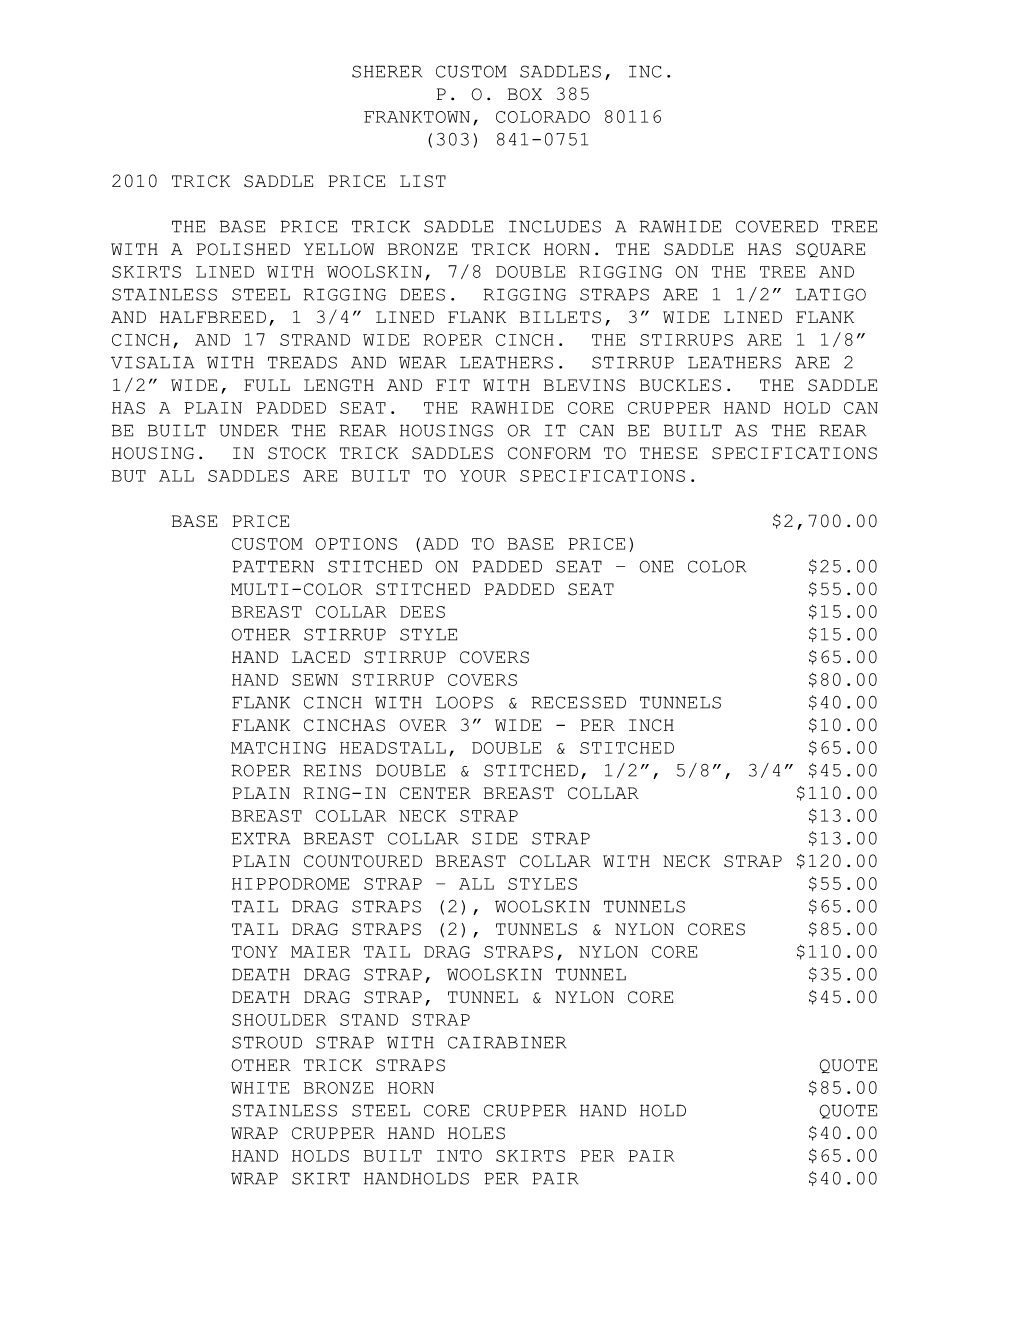 1999 Trick Saddle Price List